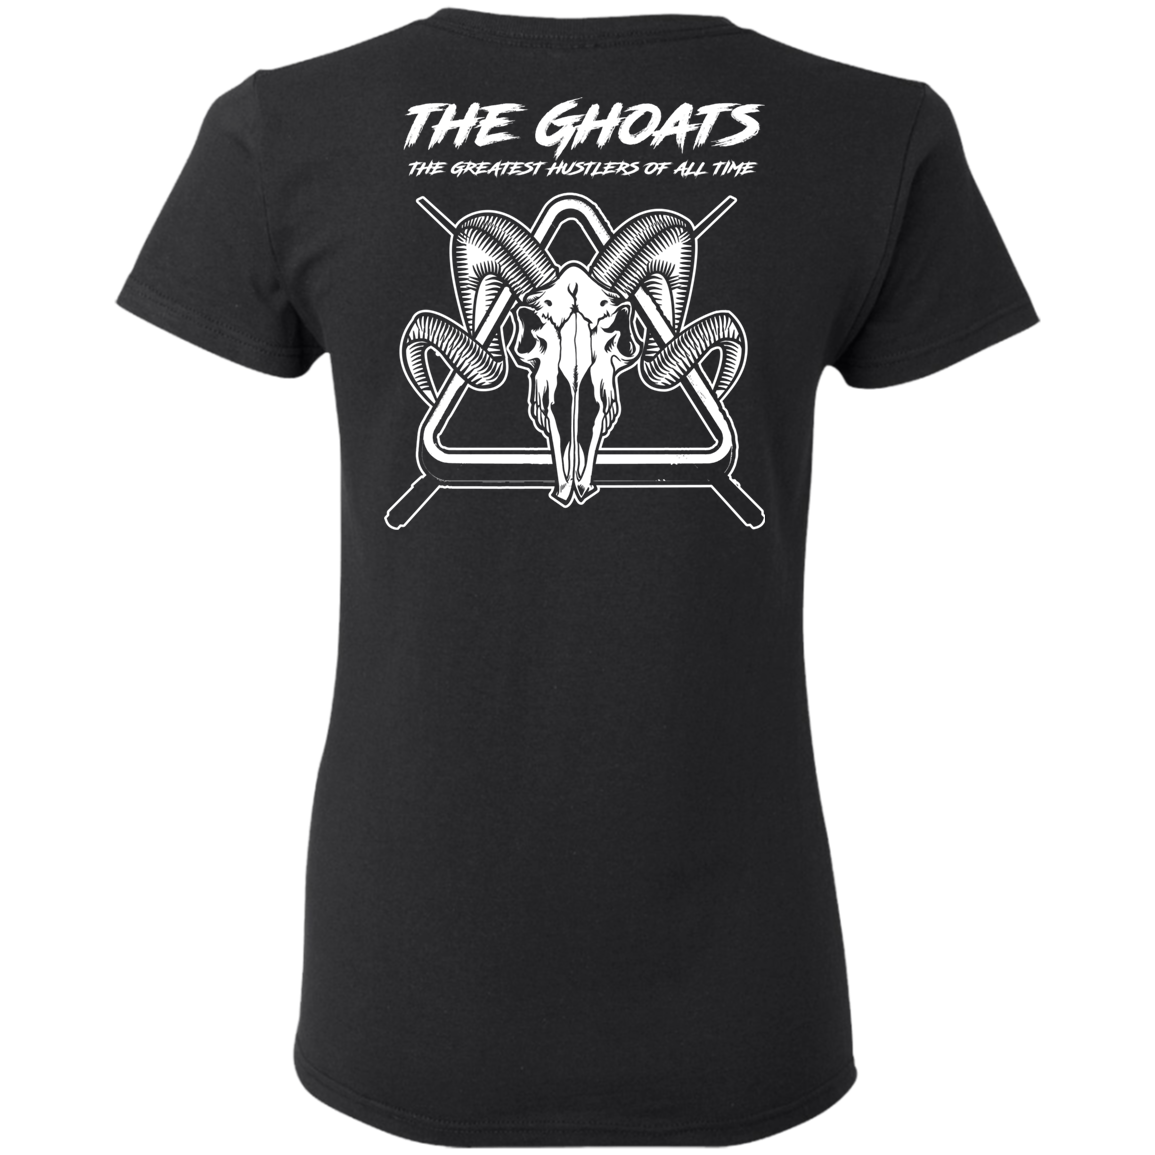 The GHOATS Custom Design #28. Shoot Pool. Ladies' Basic 100% Cotton T-Shirt